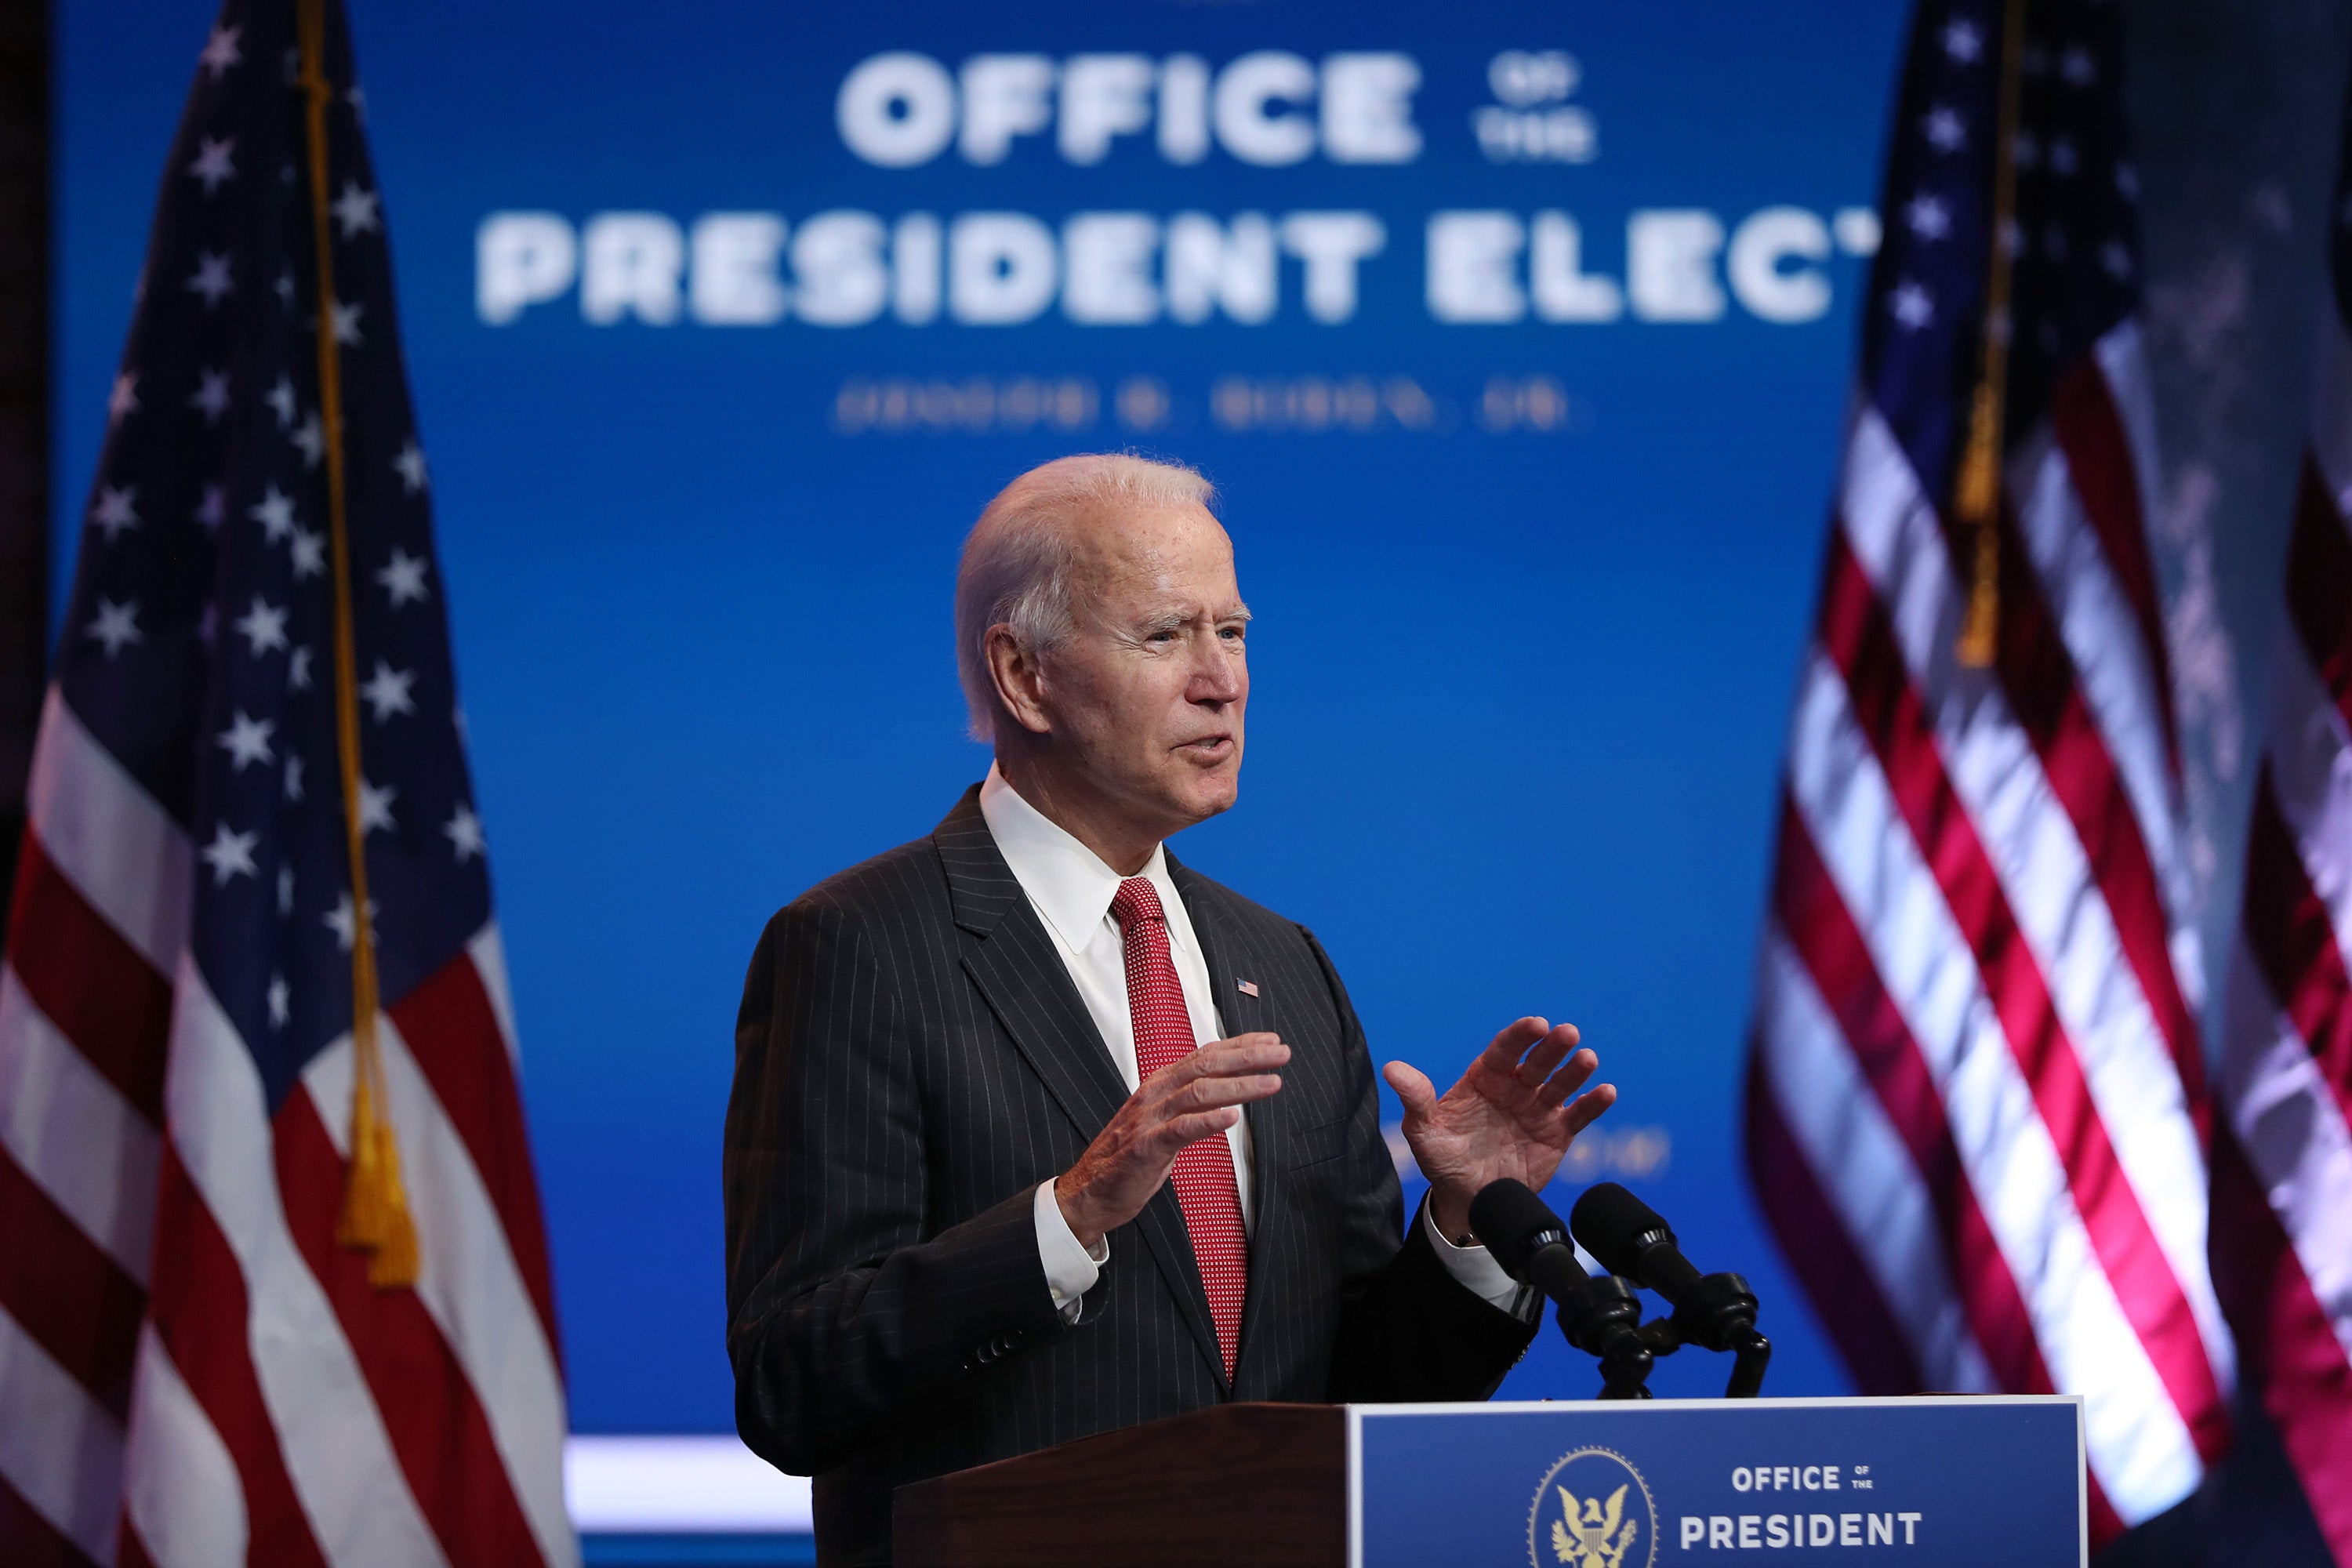 Joe Biden will be officially sworn in as president on January 20th